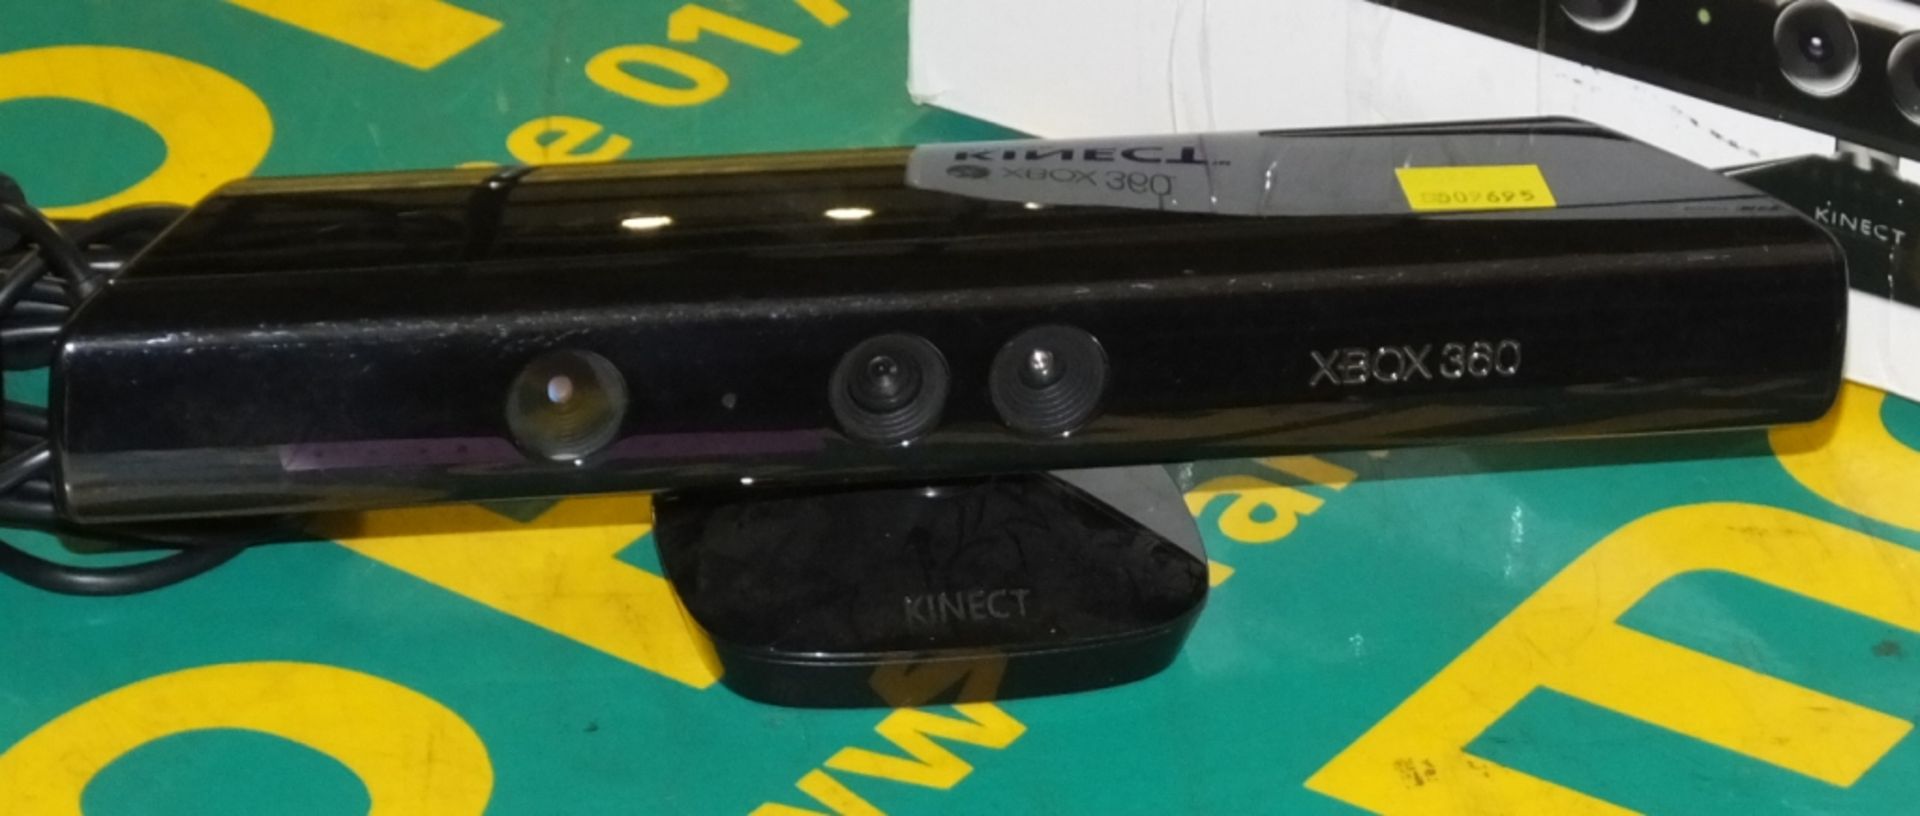 3x Xbox 360 Kinect Camera Units - Image 2 of 2